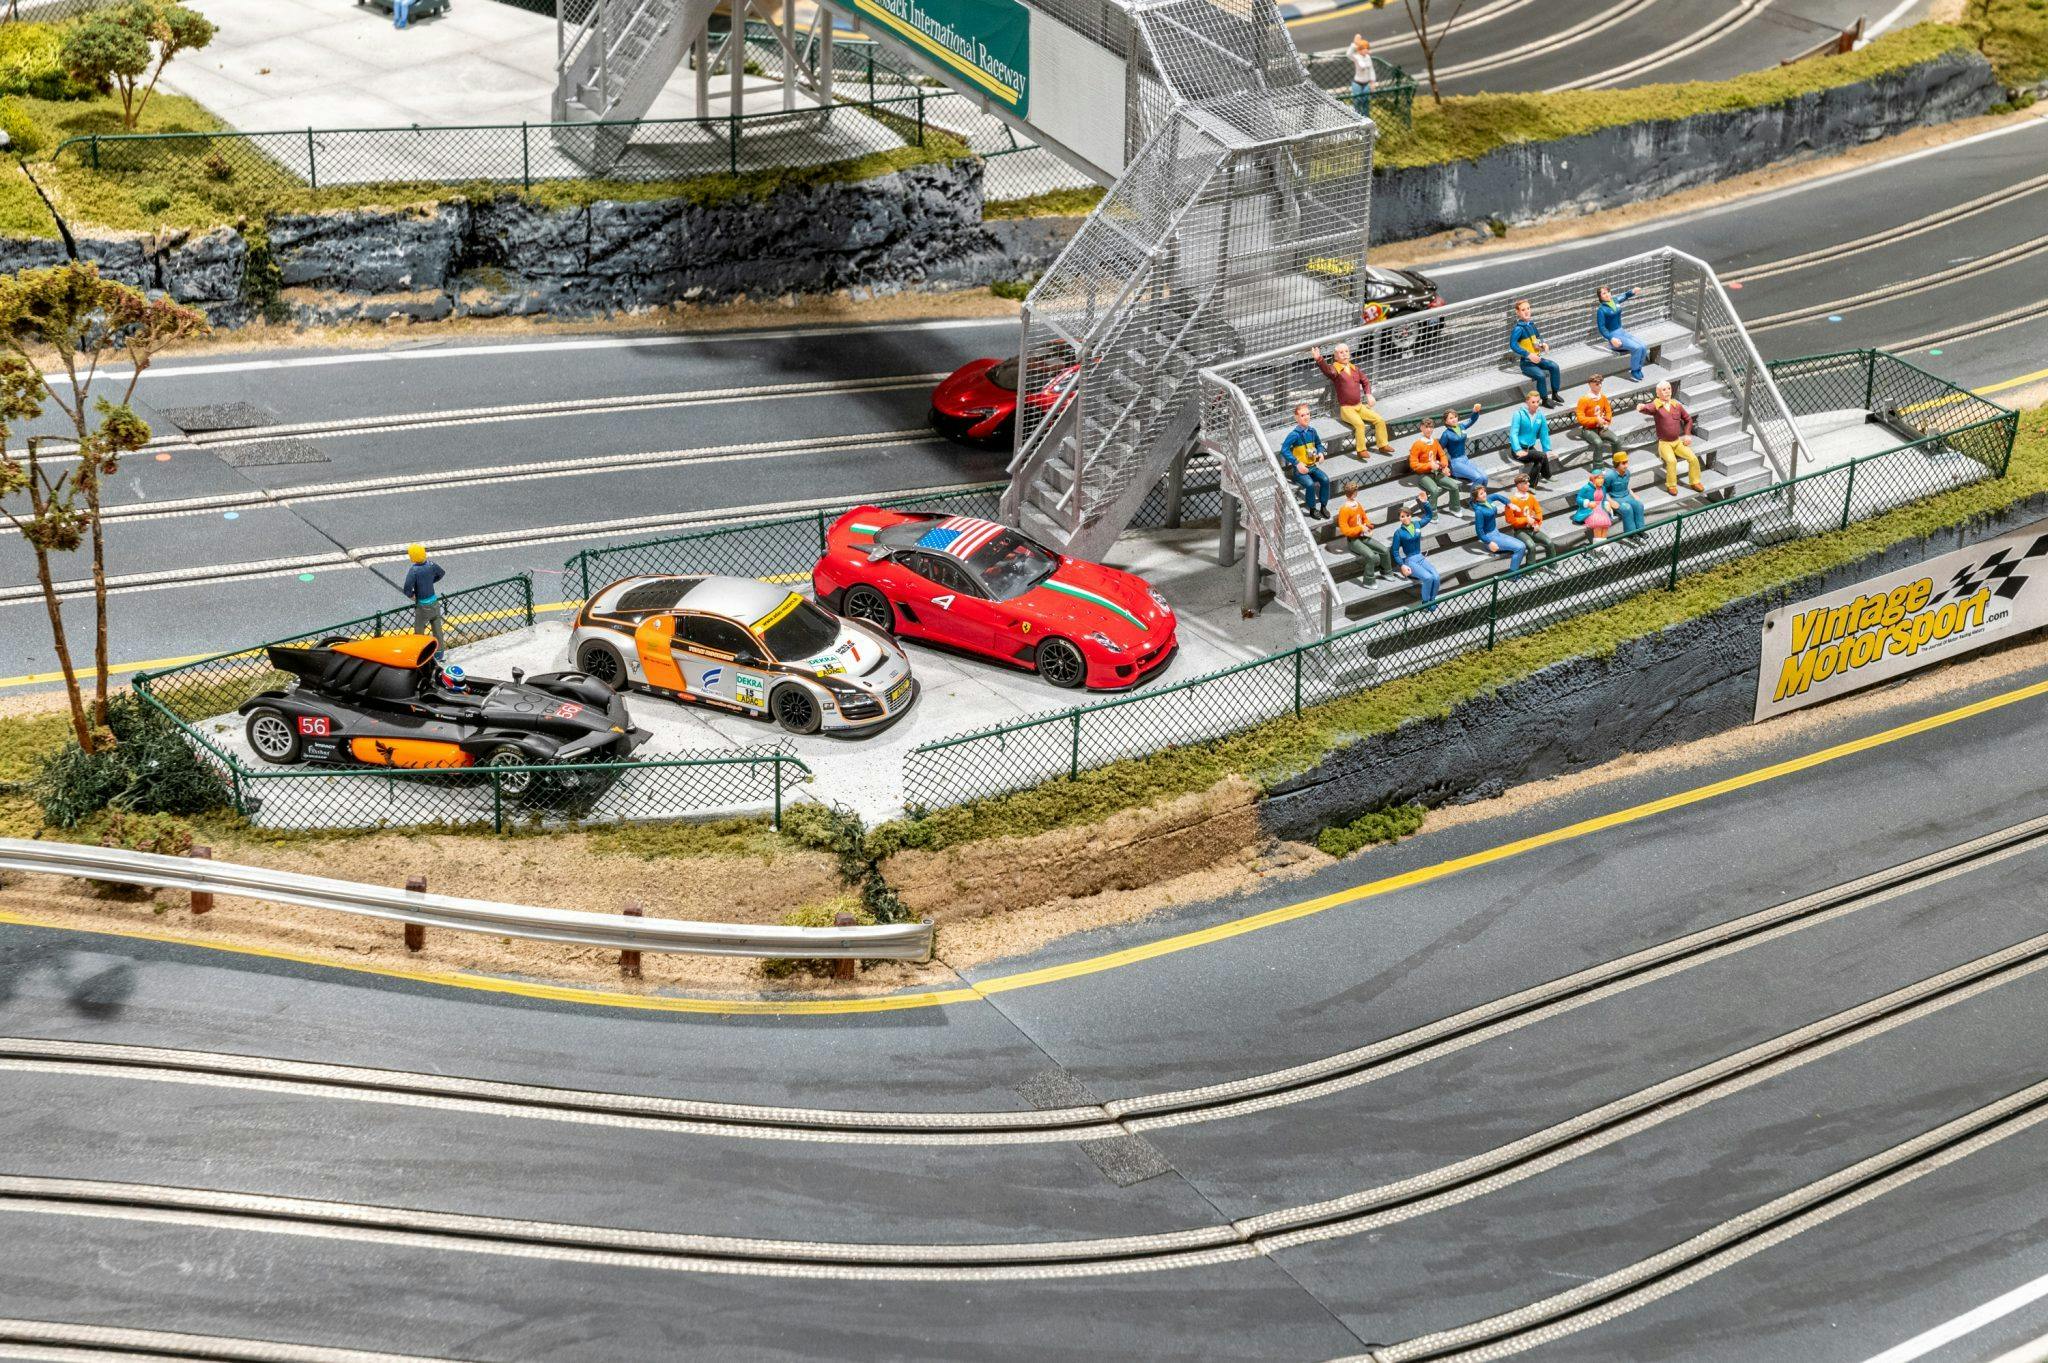 Slot Car Racetrack grandstands and show cars